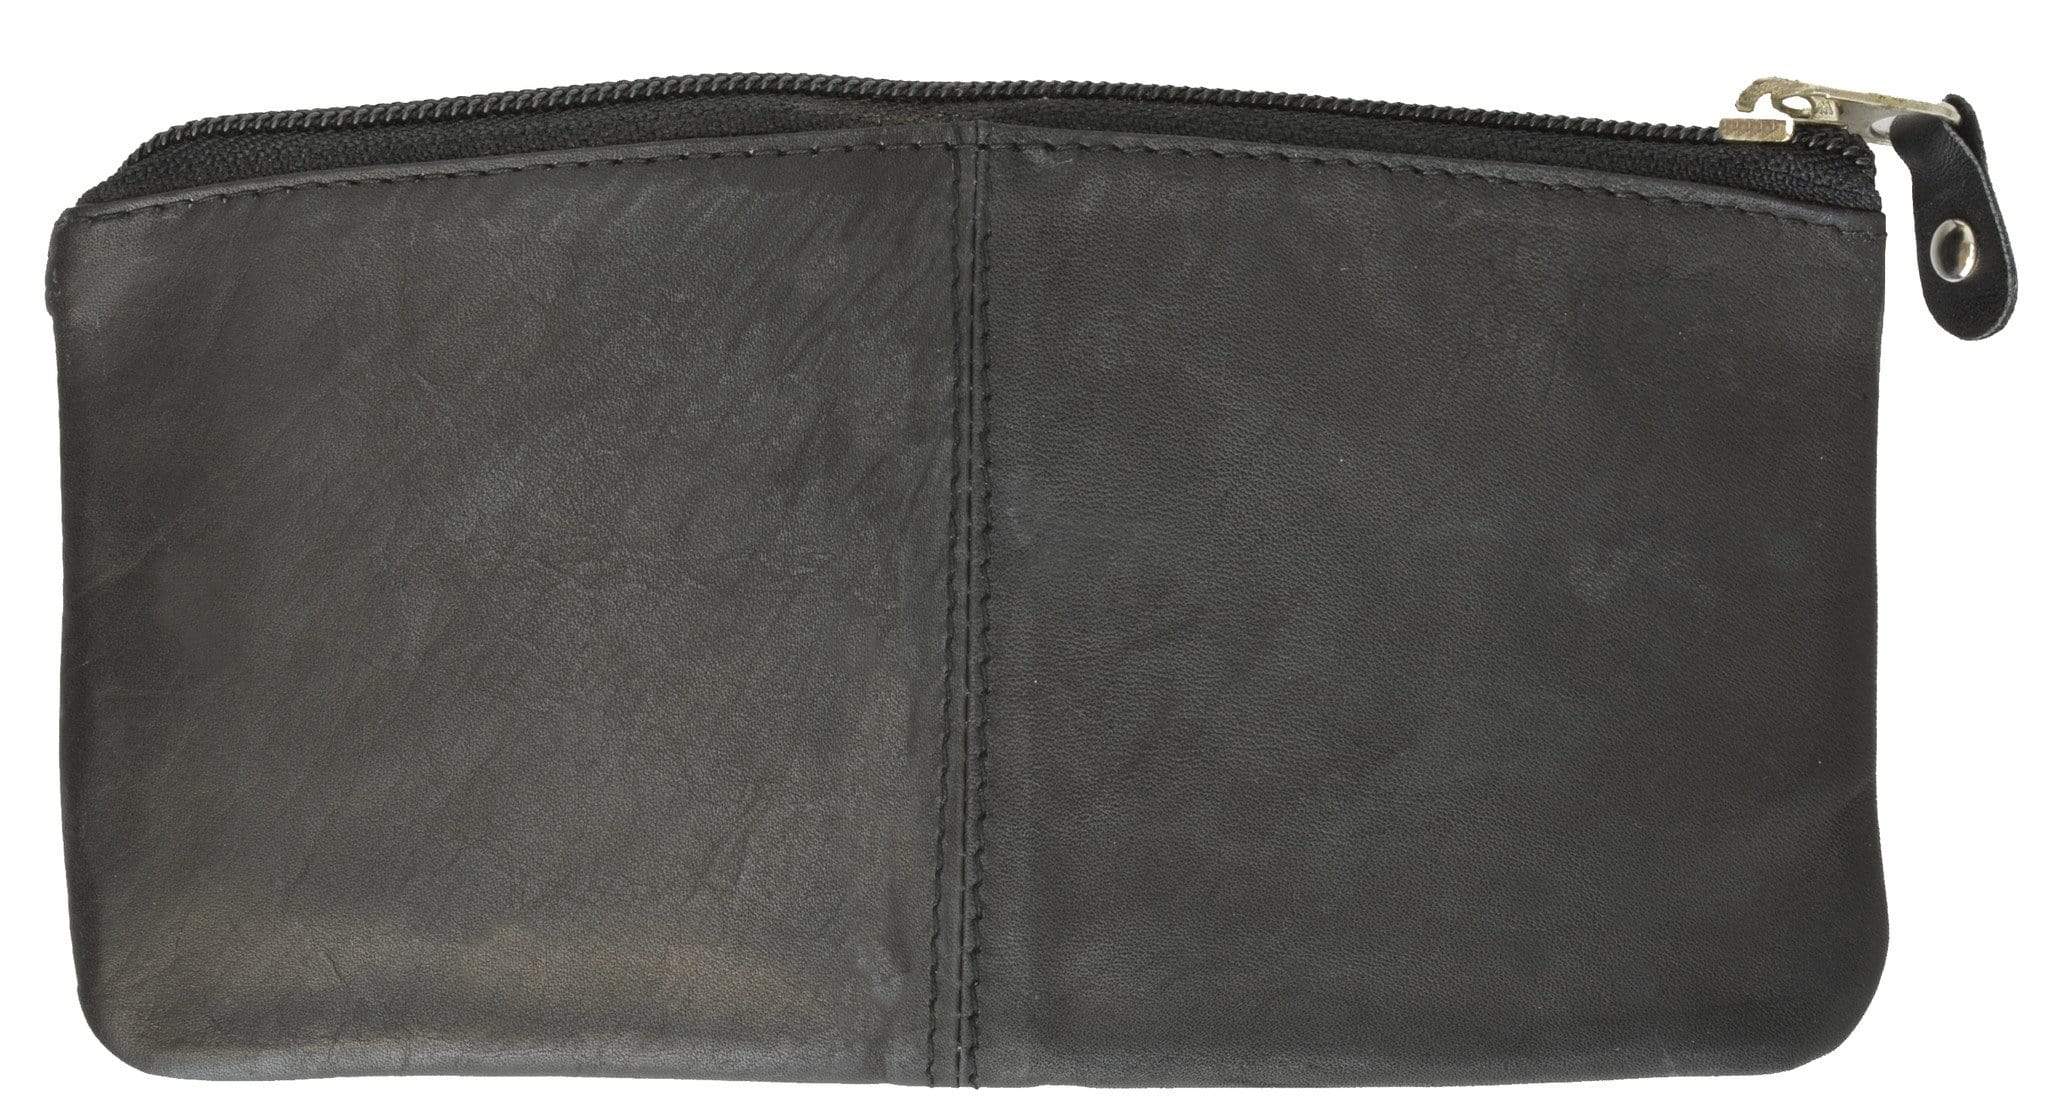 marshal black change purse or coupon holder 1516 01 leather wallets for mens